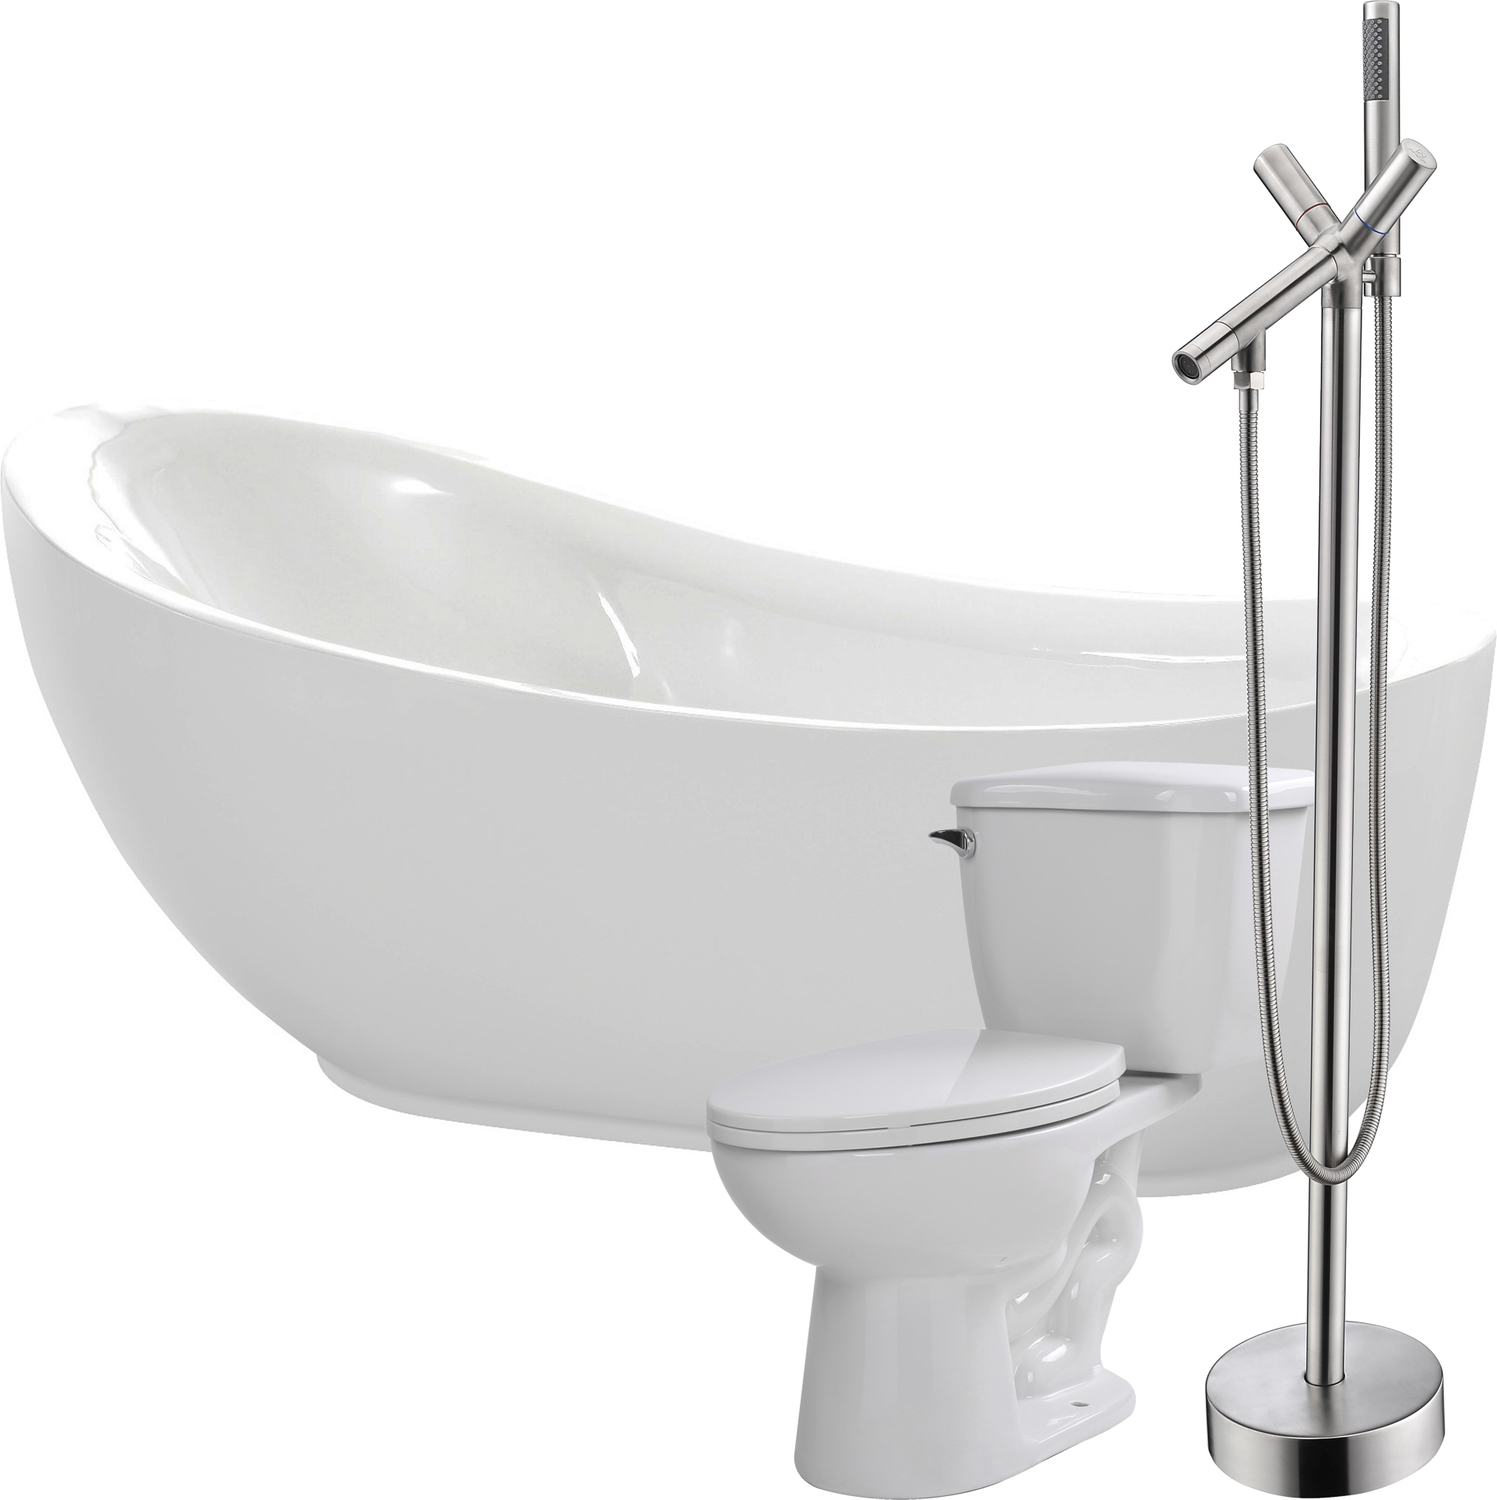 maax freestanding tub installation Anzzi BATHROOM - Bathtubs - Freestanding Bathtubs - One Piece - Acrylic White